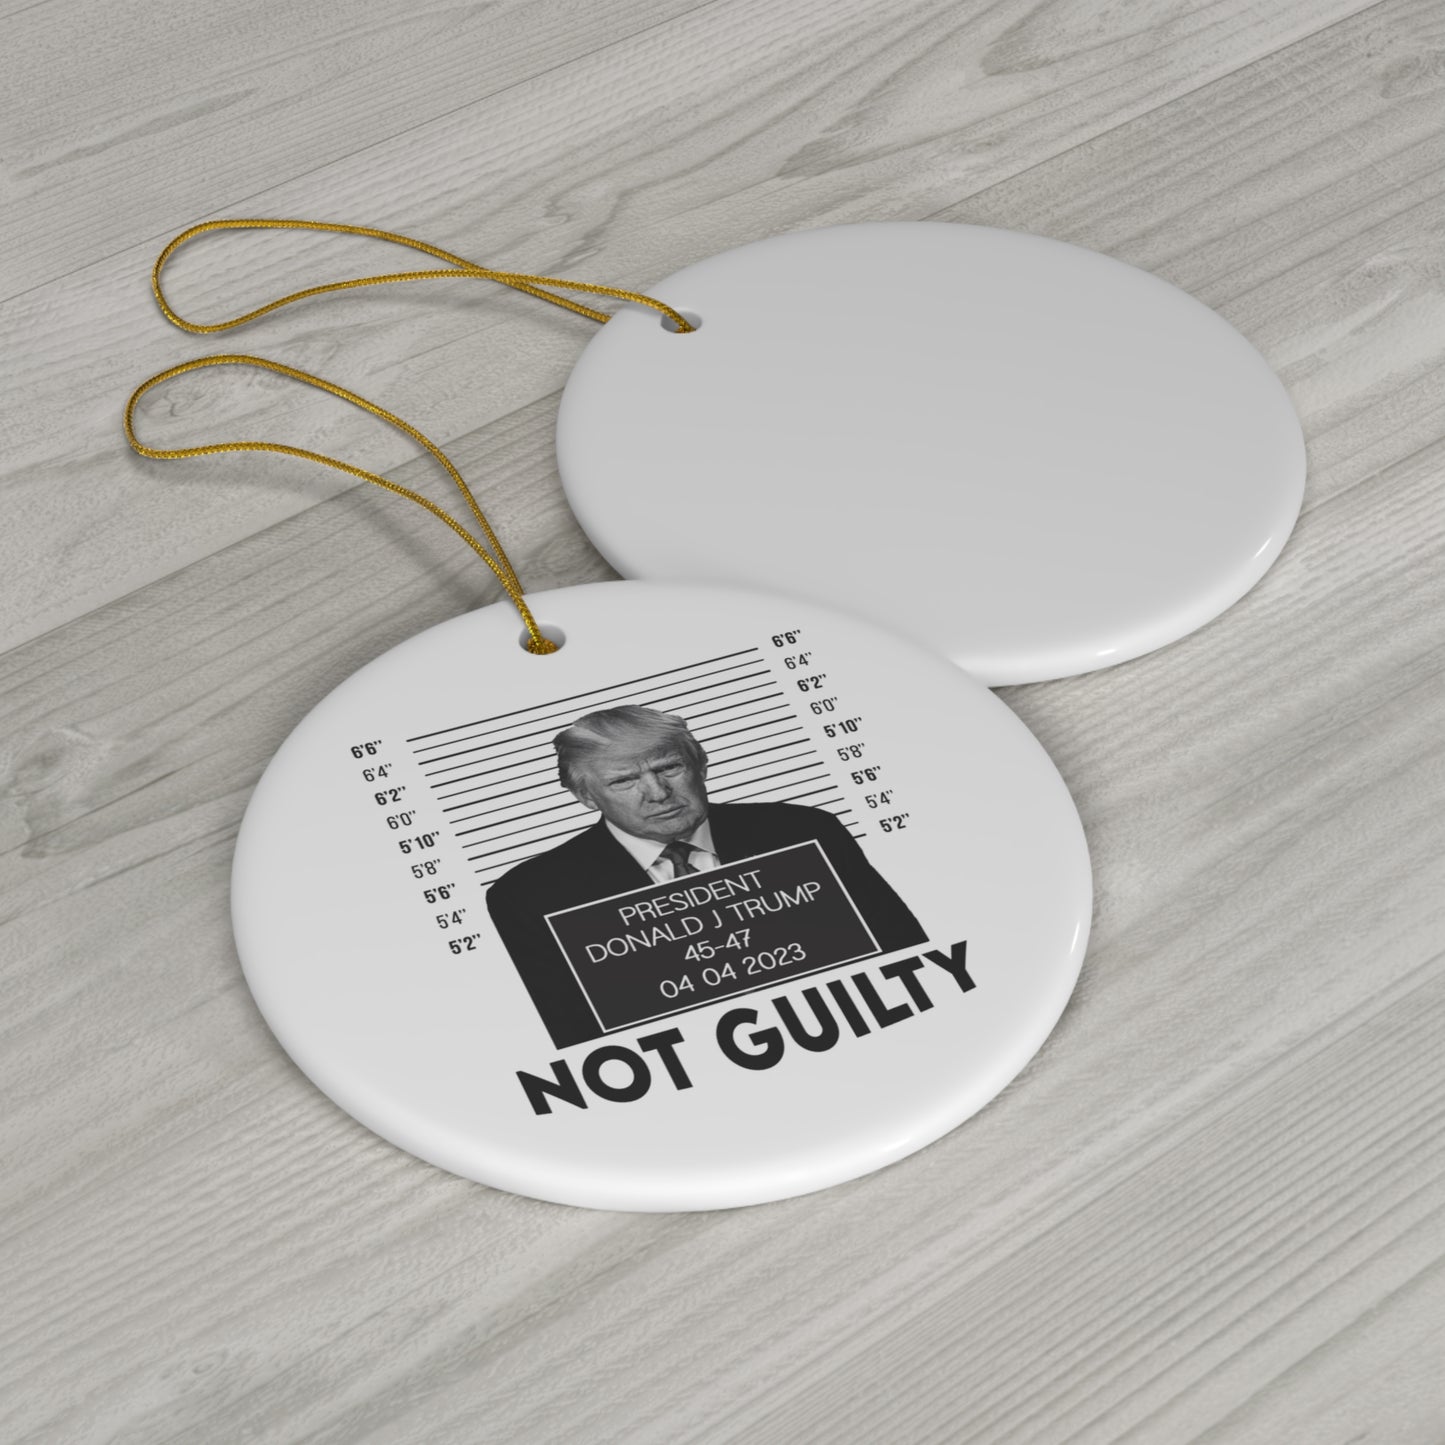 President Mugshot Trump Not Guilty 2023 Ornament Circle Ceramic Ornament